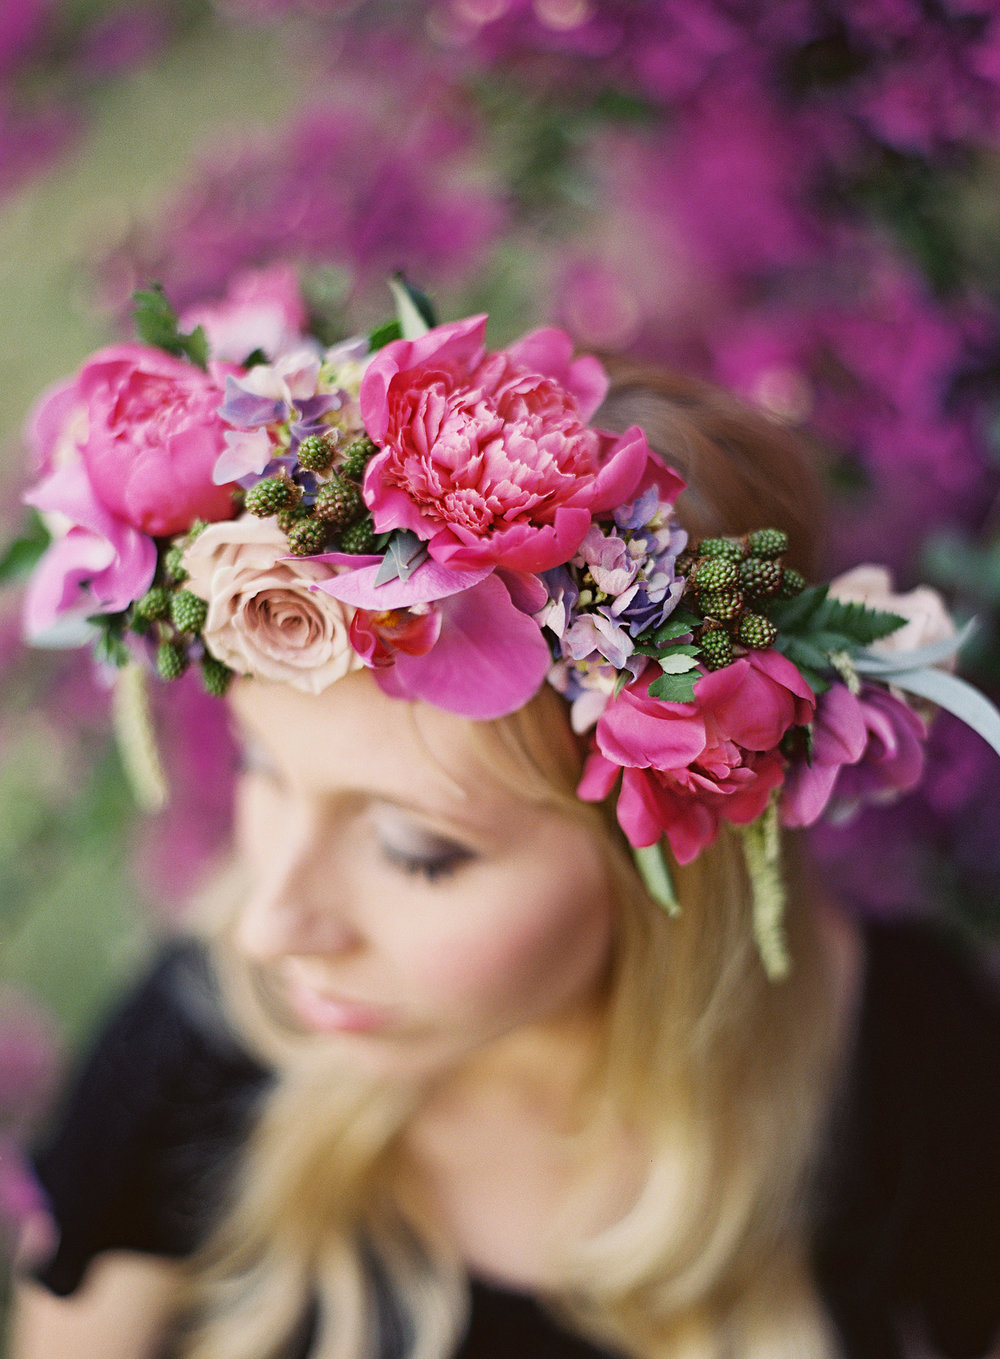 Sydney-Wedding-Photographer-Love-Note-Chanele-Rose-Flowers.jpg